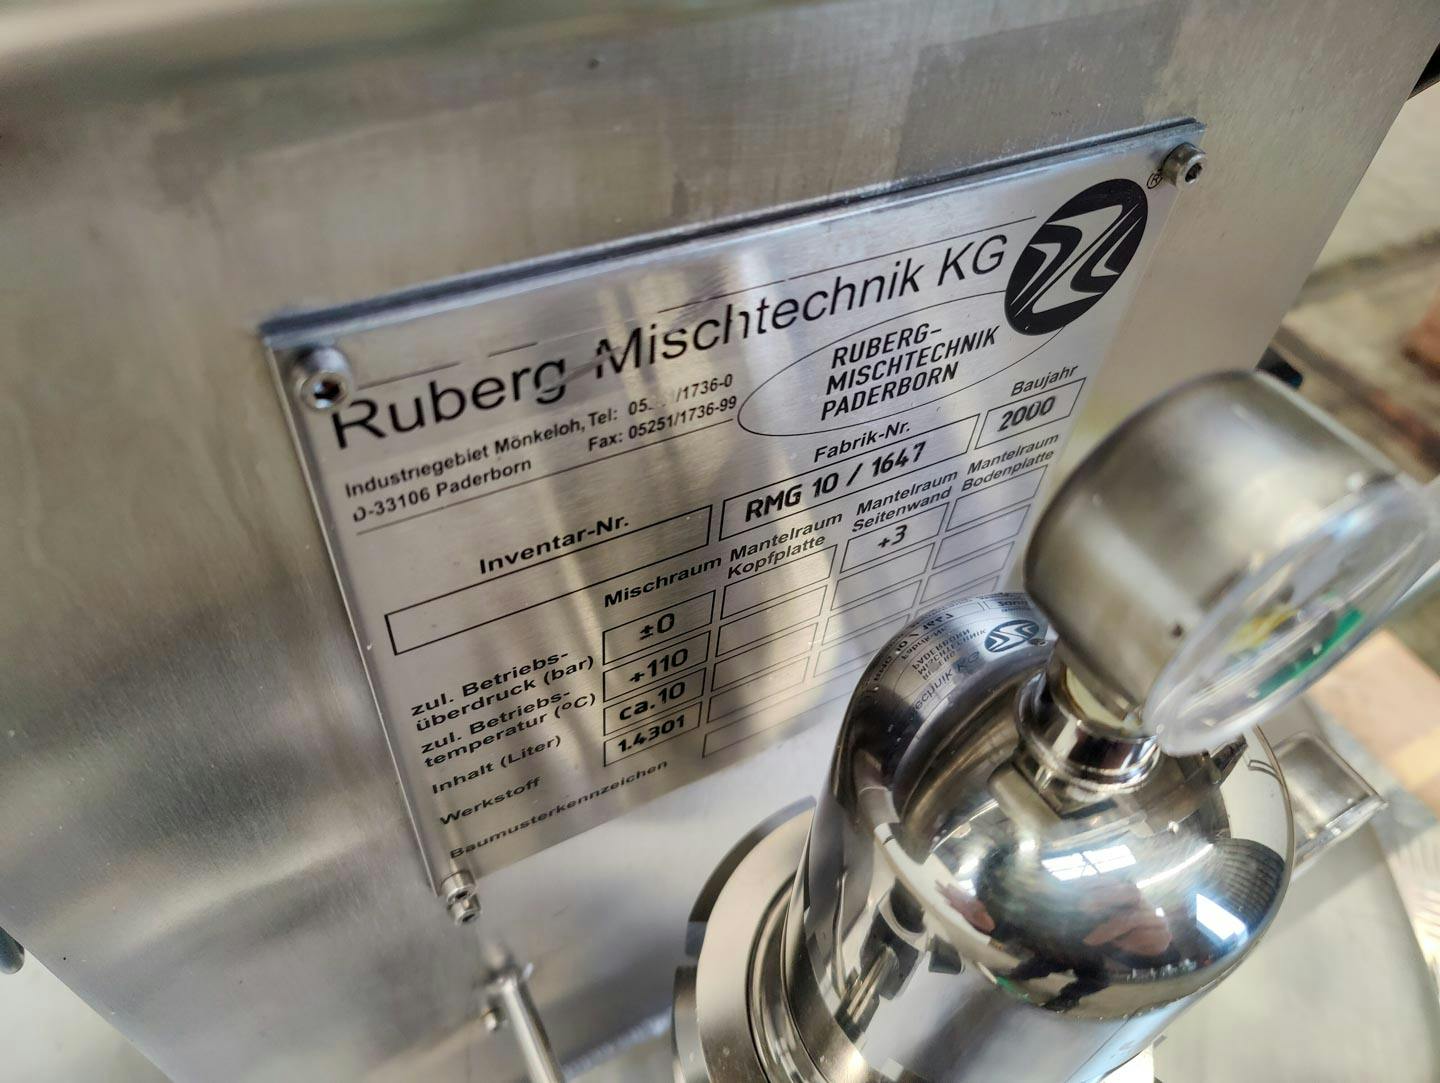 Ruberg Mischtechnik KG RMG 10/1647 - Paddle mixer - image 11